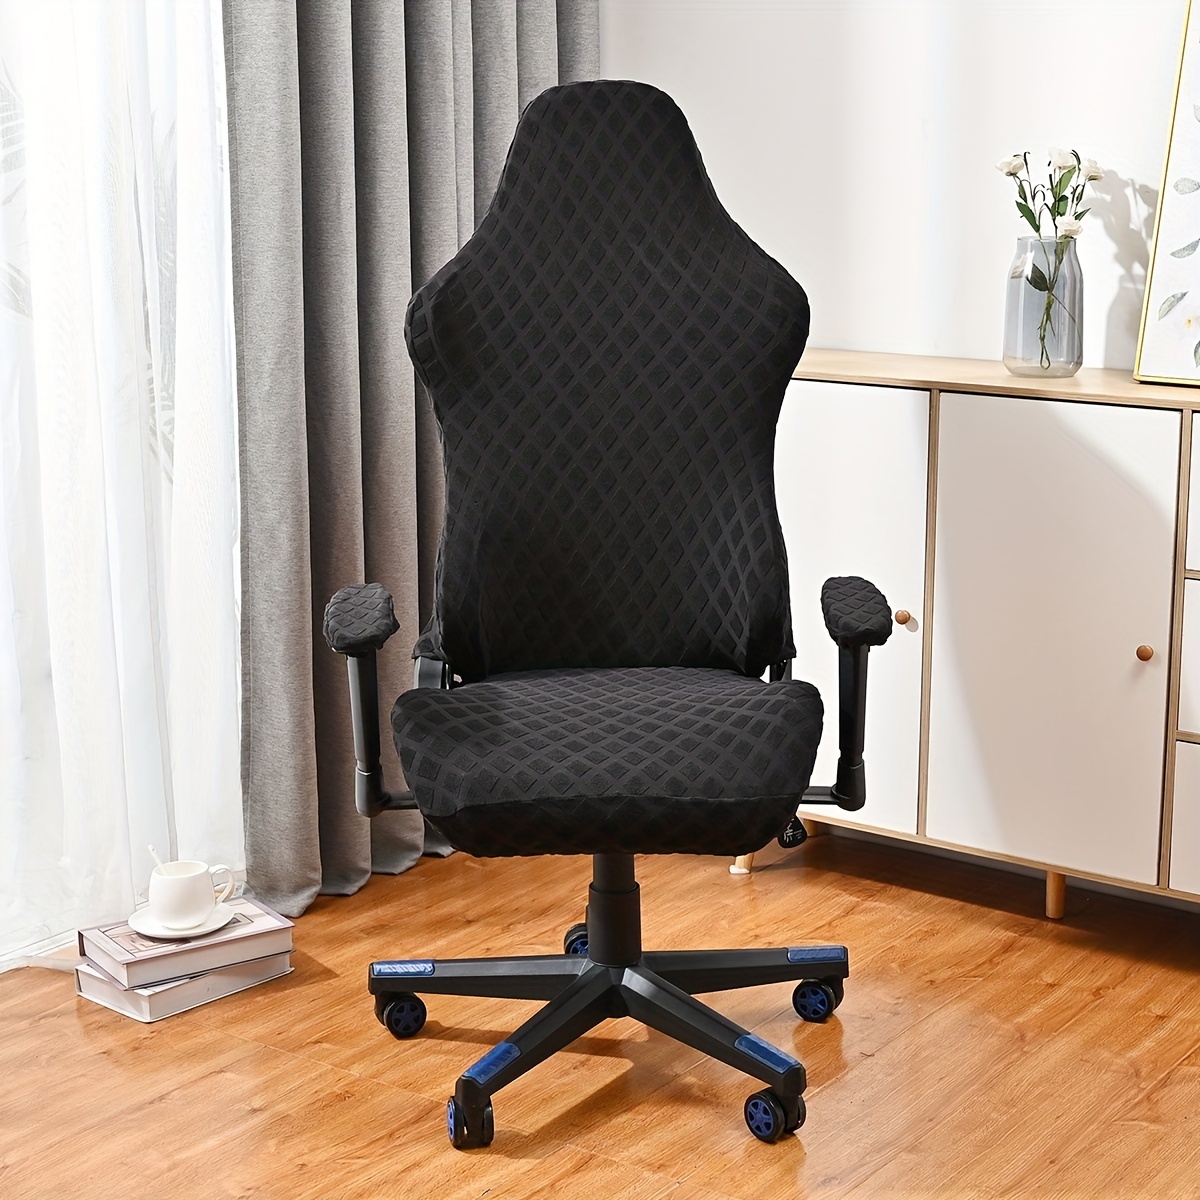 https://img.kwcdn.com/product/jacquard-rhombus-elastic-chair-cover/d69d2f15w98k18-96a4e516/Fancyalgo/VirtualModelMatting/32634891dc9685ced7b22e94b7faf90b.jpg